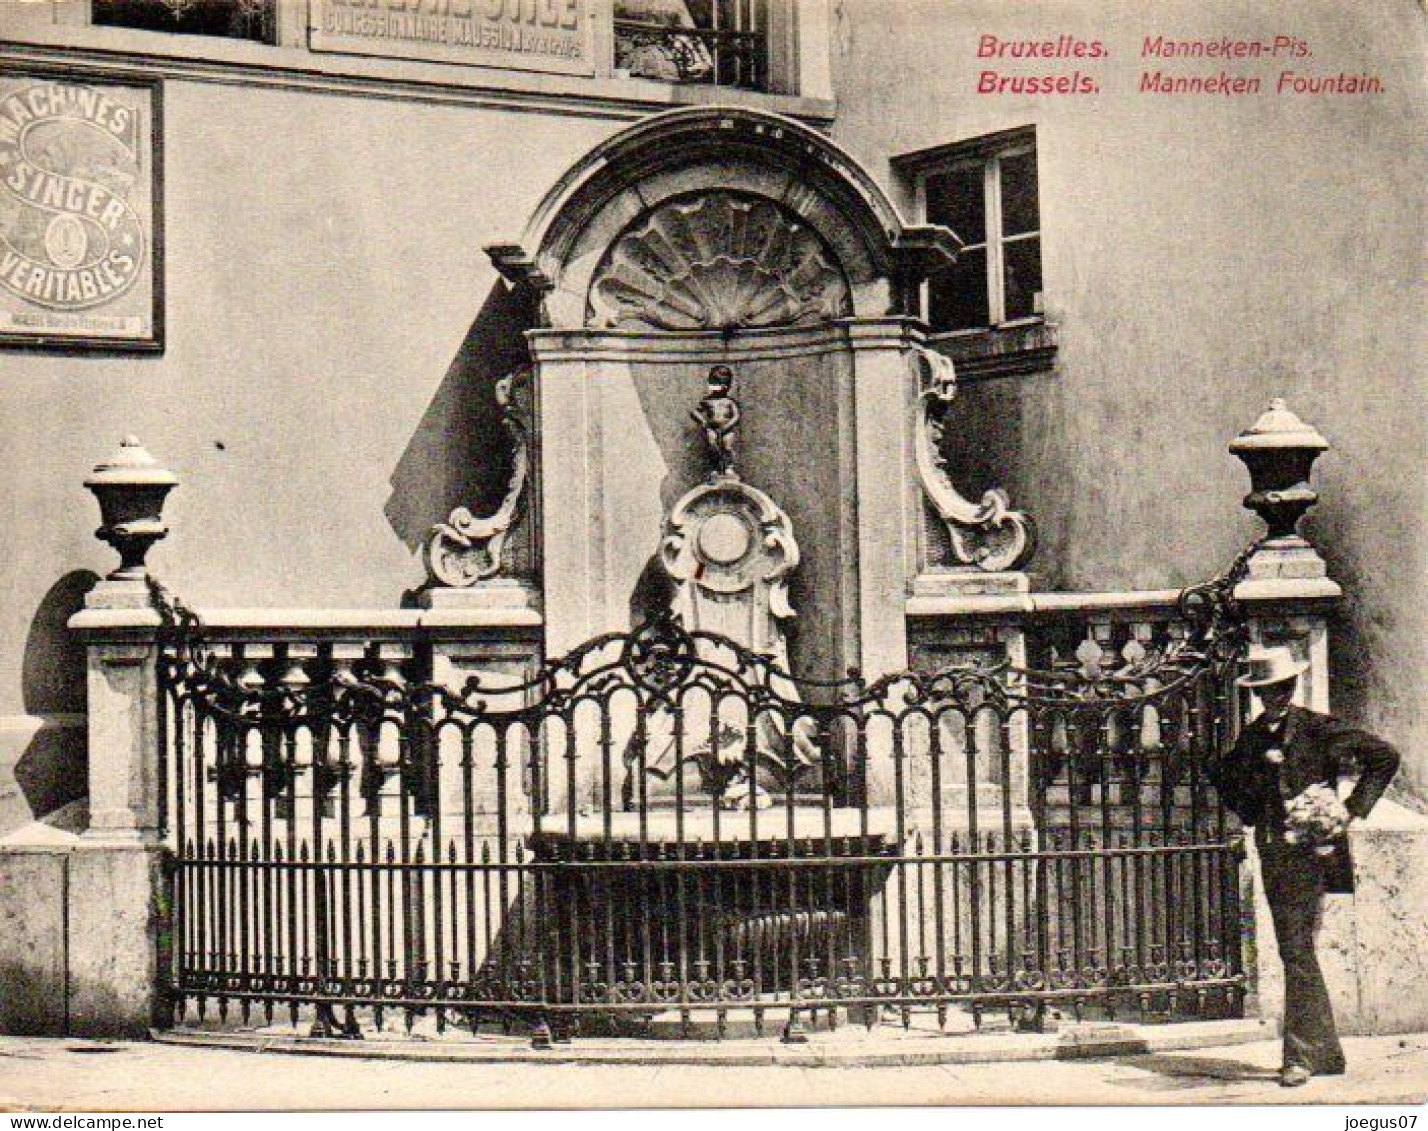 Belgique - BRUXELLES Manneken-Pis (Machines Singer Véritables) - BRUSSELS - Mannekan Fountain - Format 18x13,7cm - Beroemde Personen